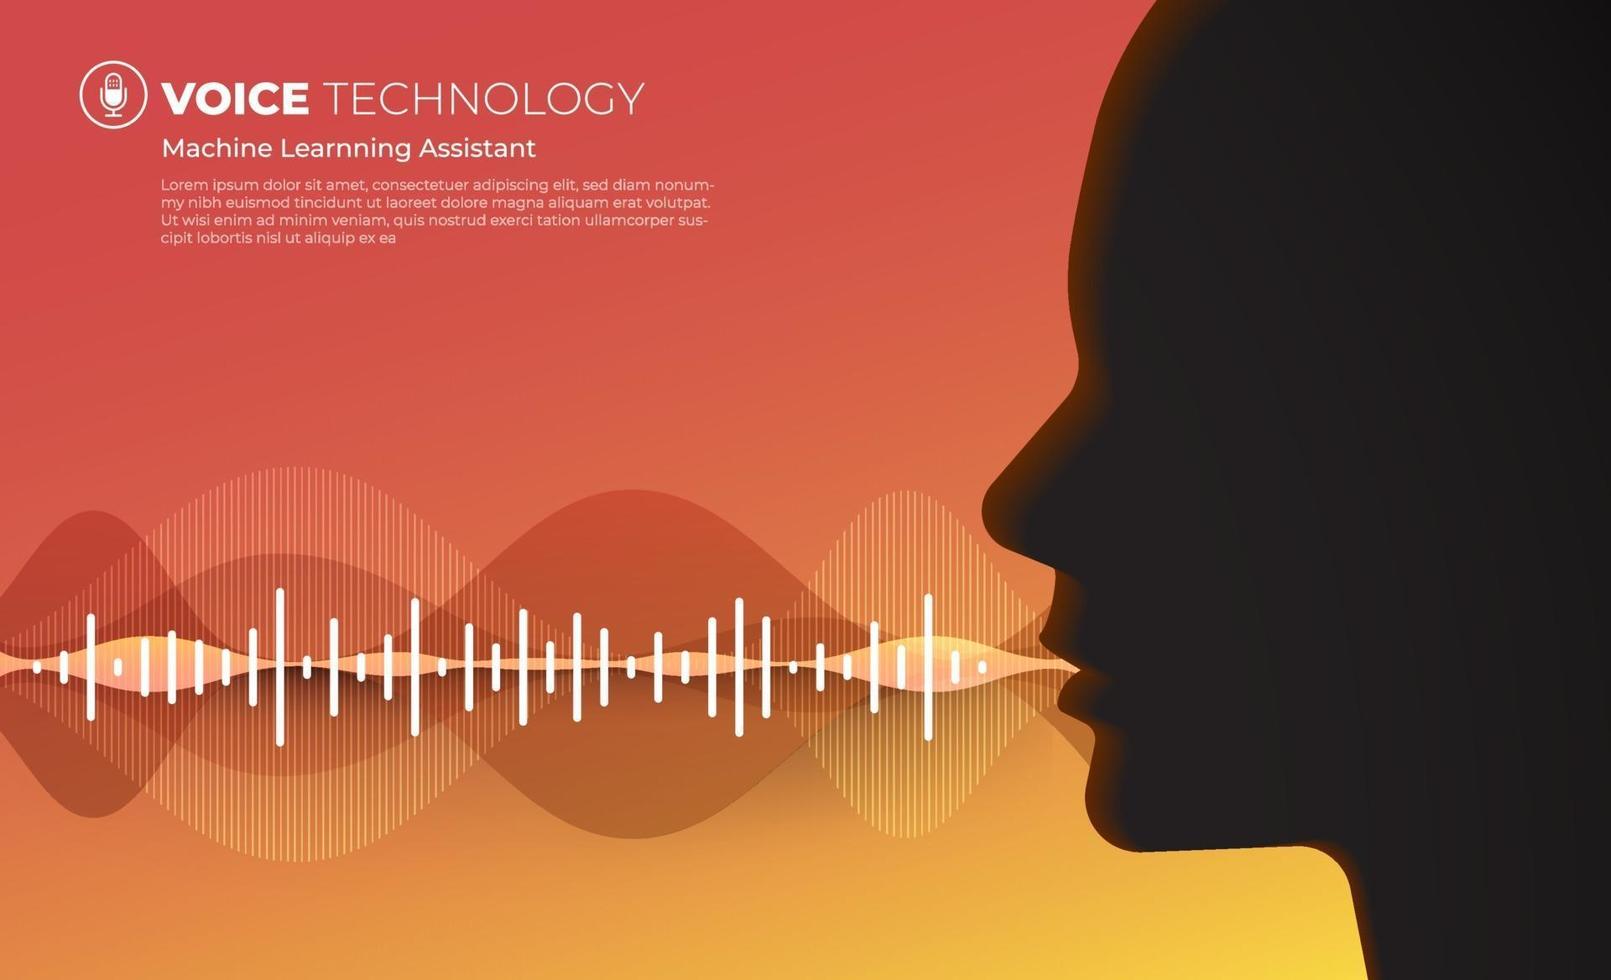 Concept Voice Technology vector